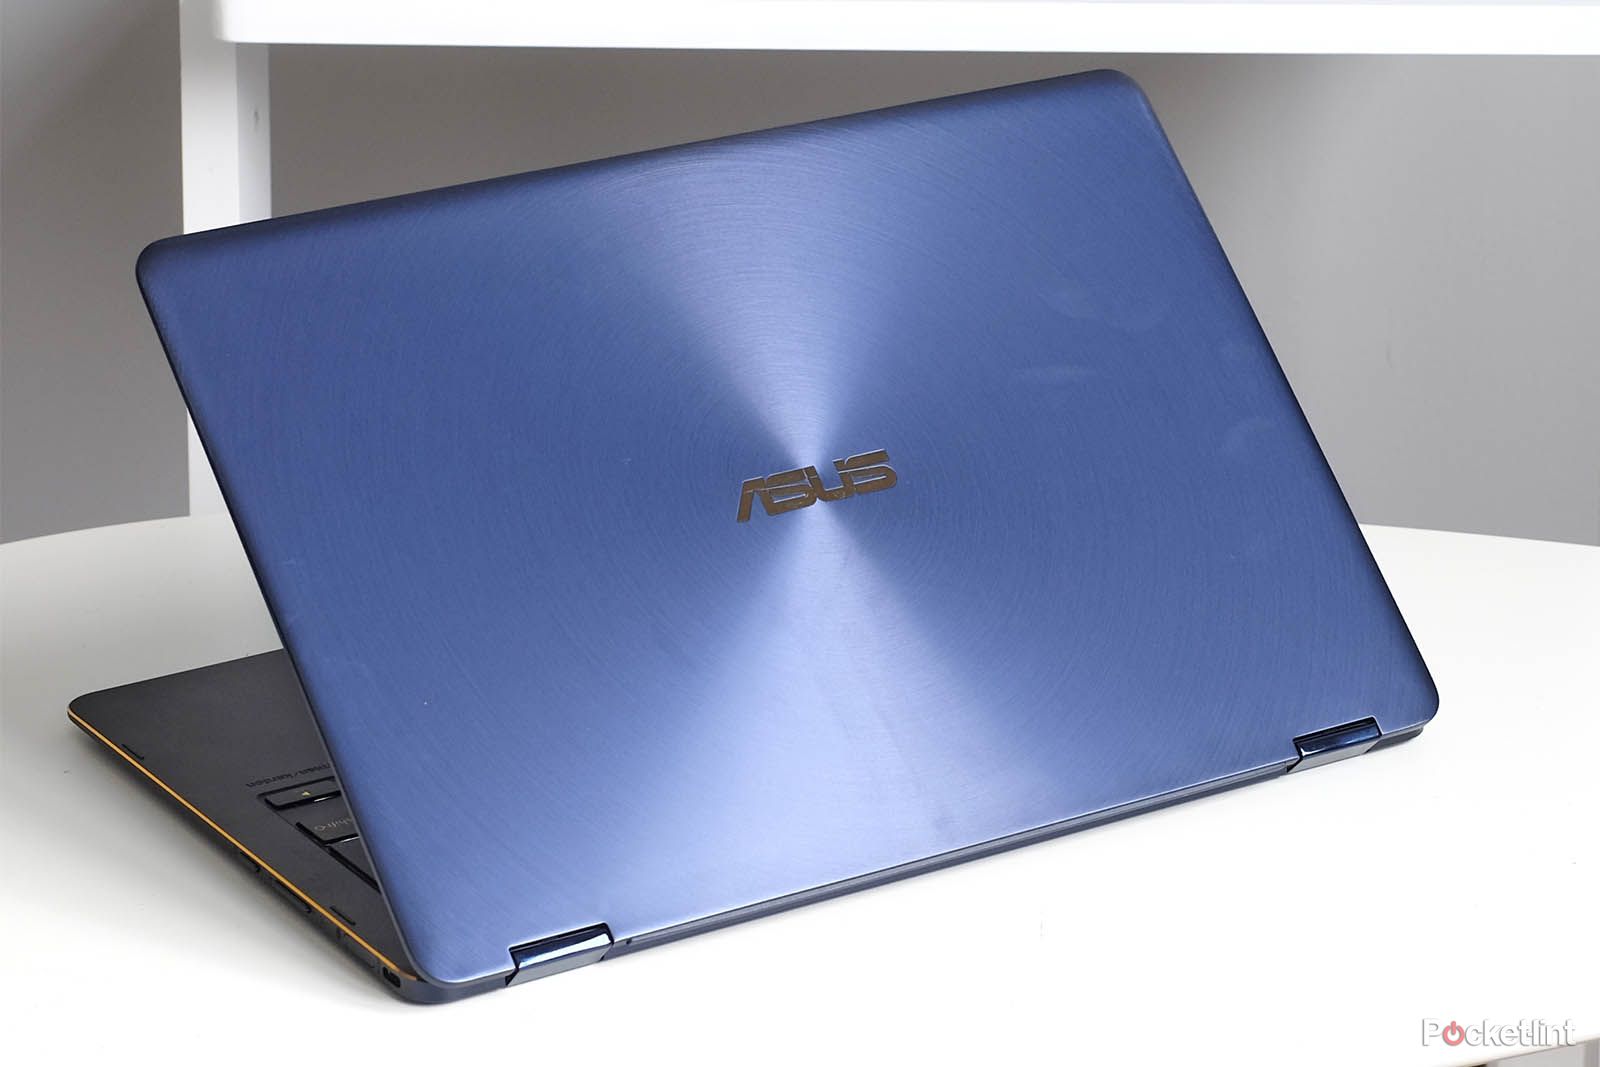 Asus ZenBook Flip S review image 3